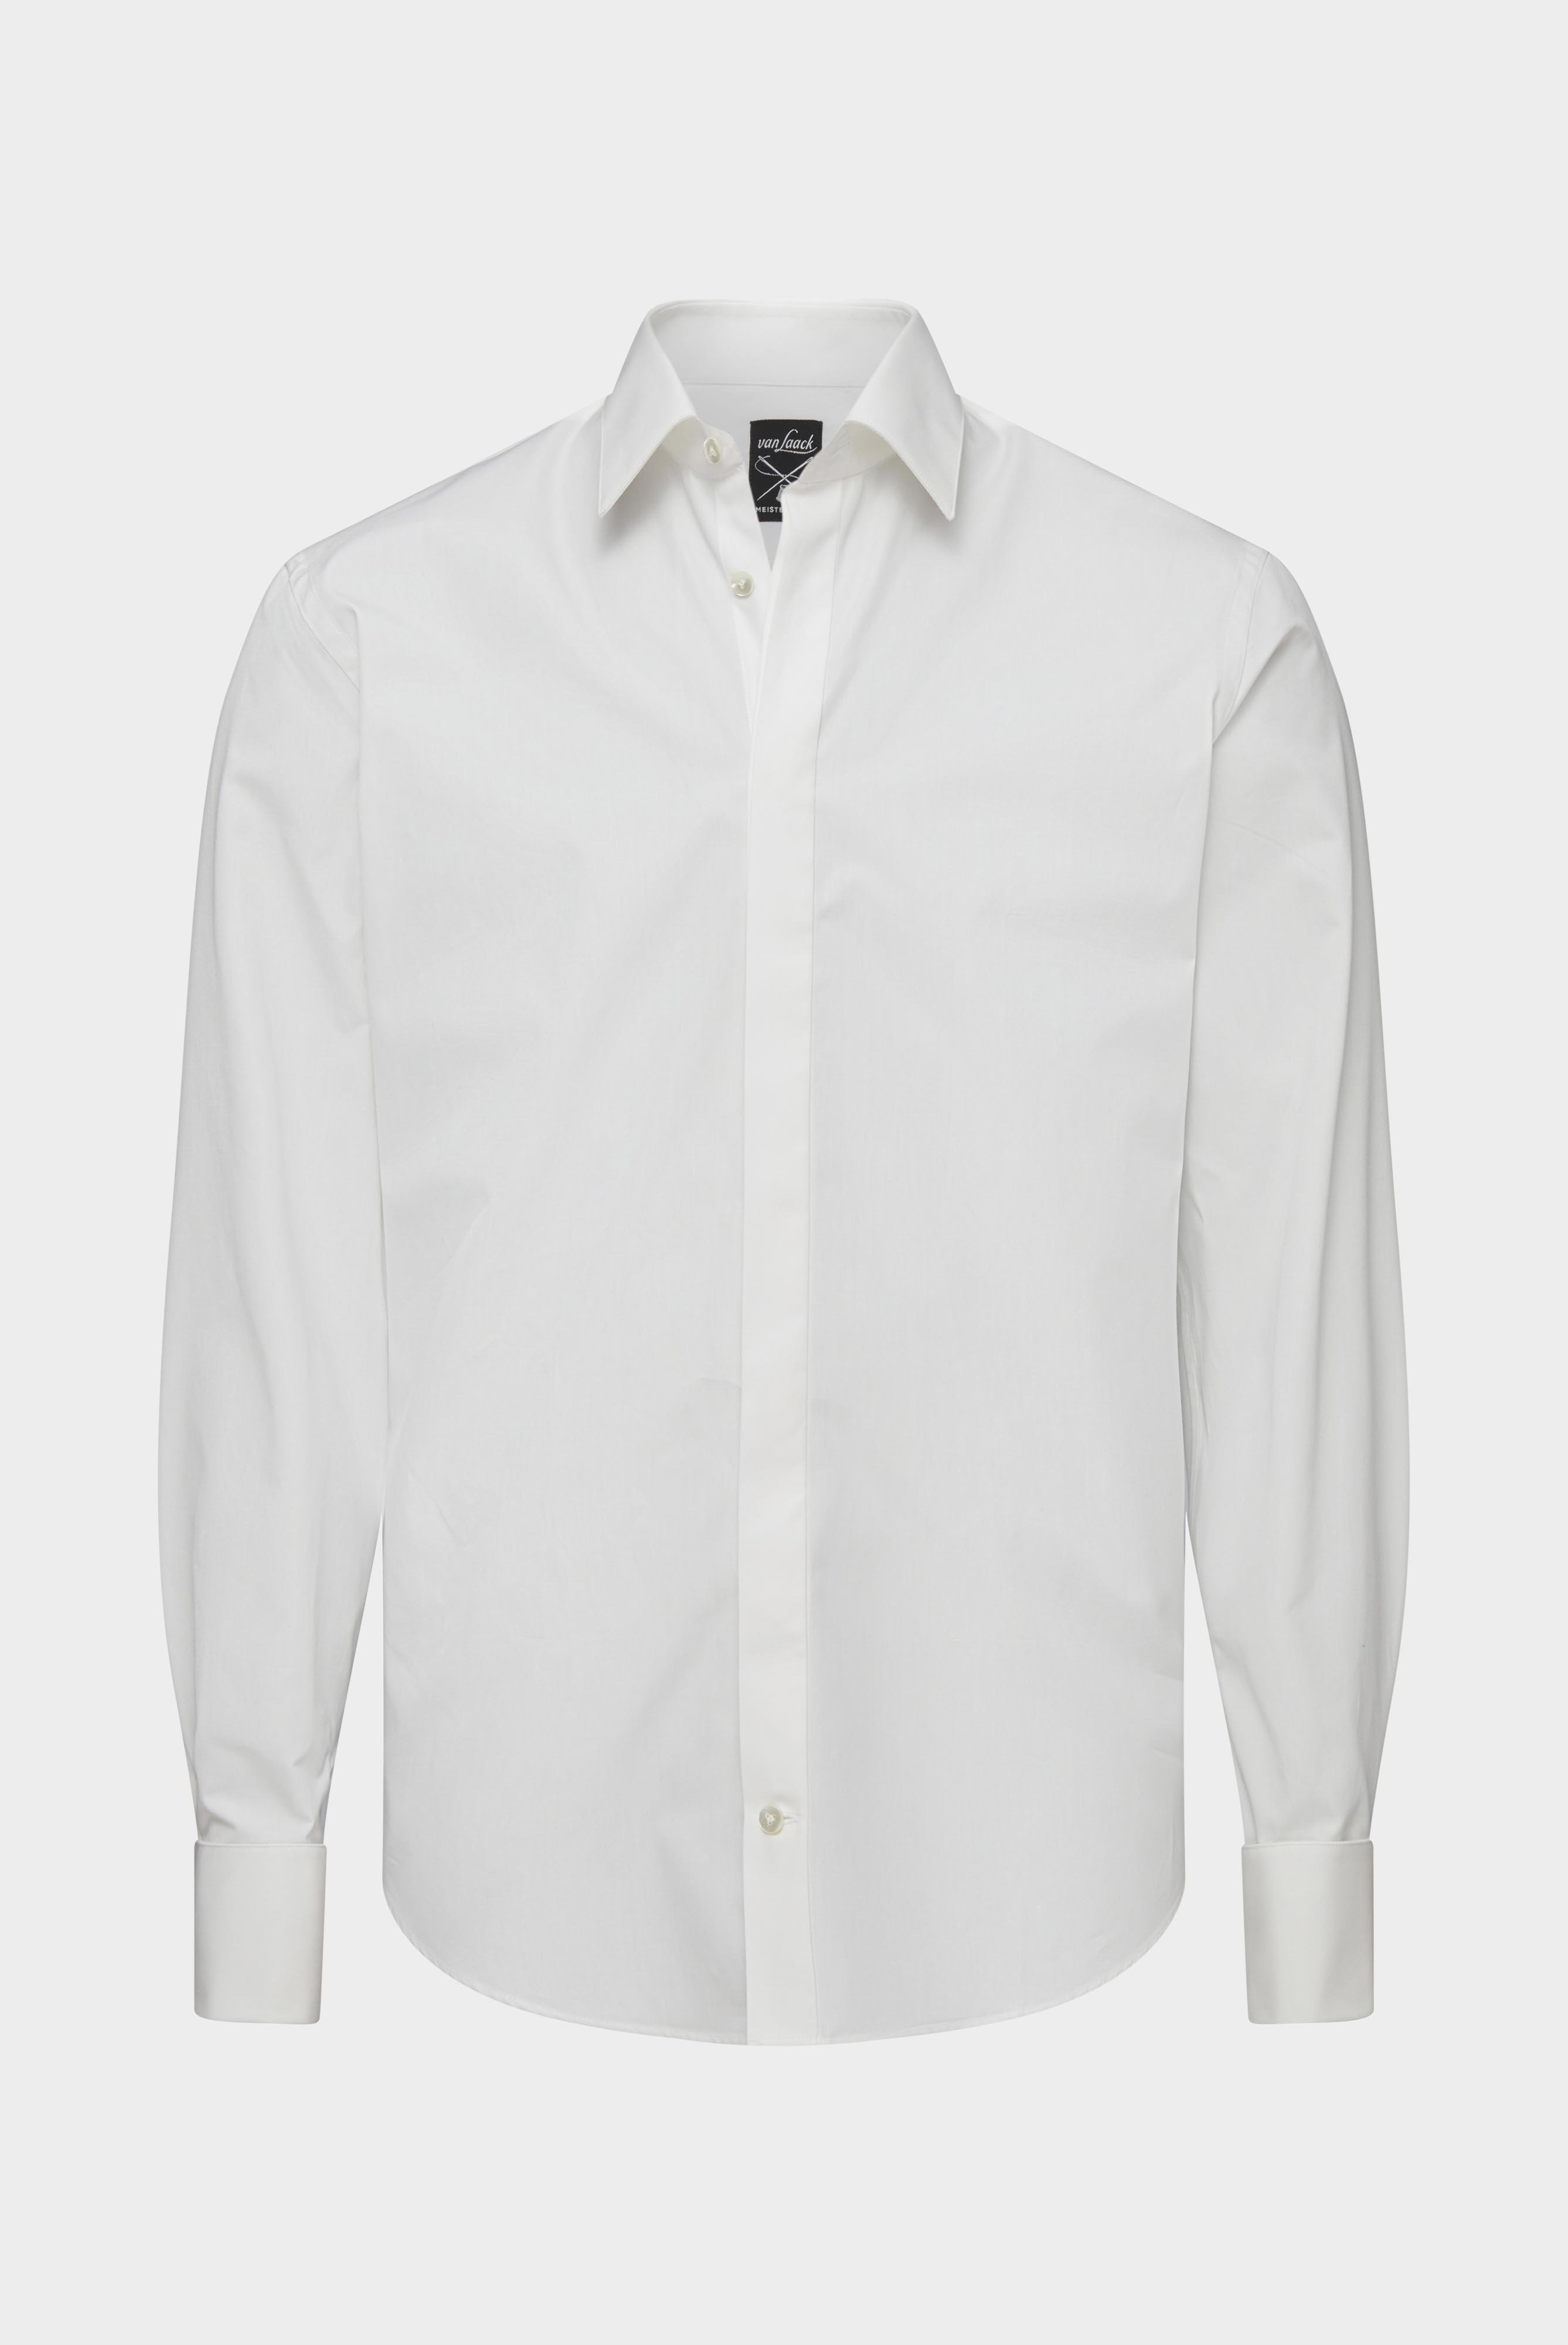 Festliche Hemden+Smokinghemd Slim Fit+20.2063.NV.130657.100.37